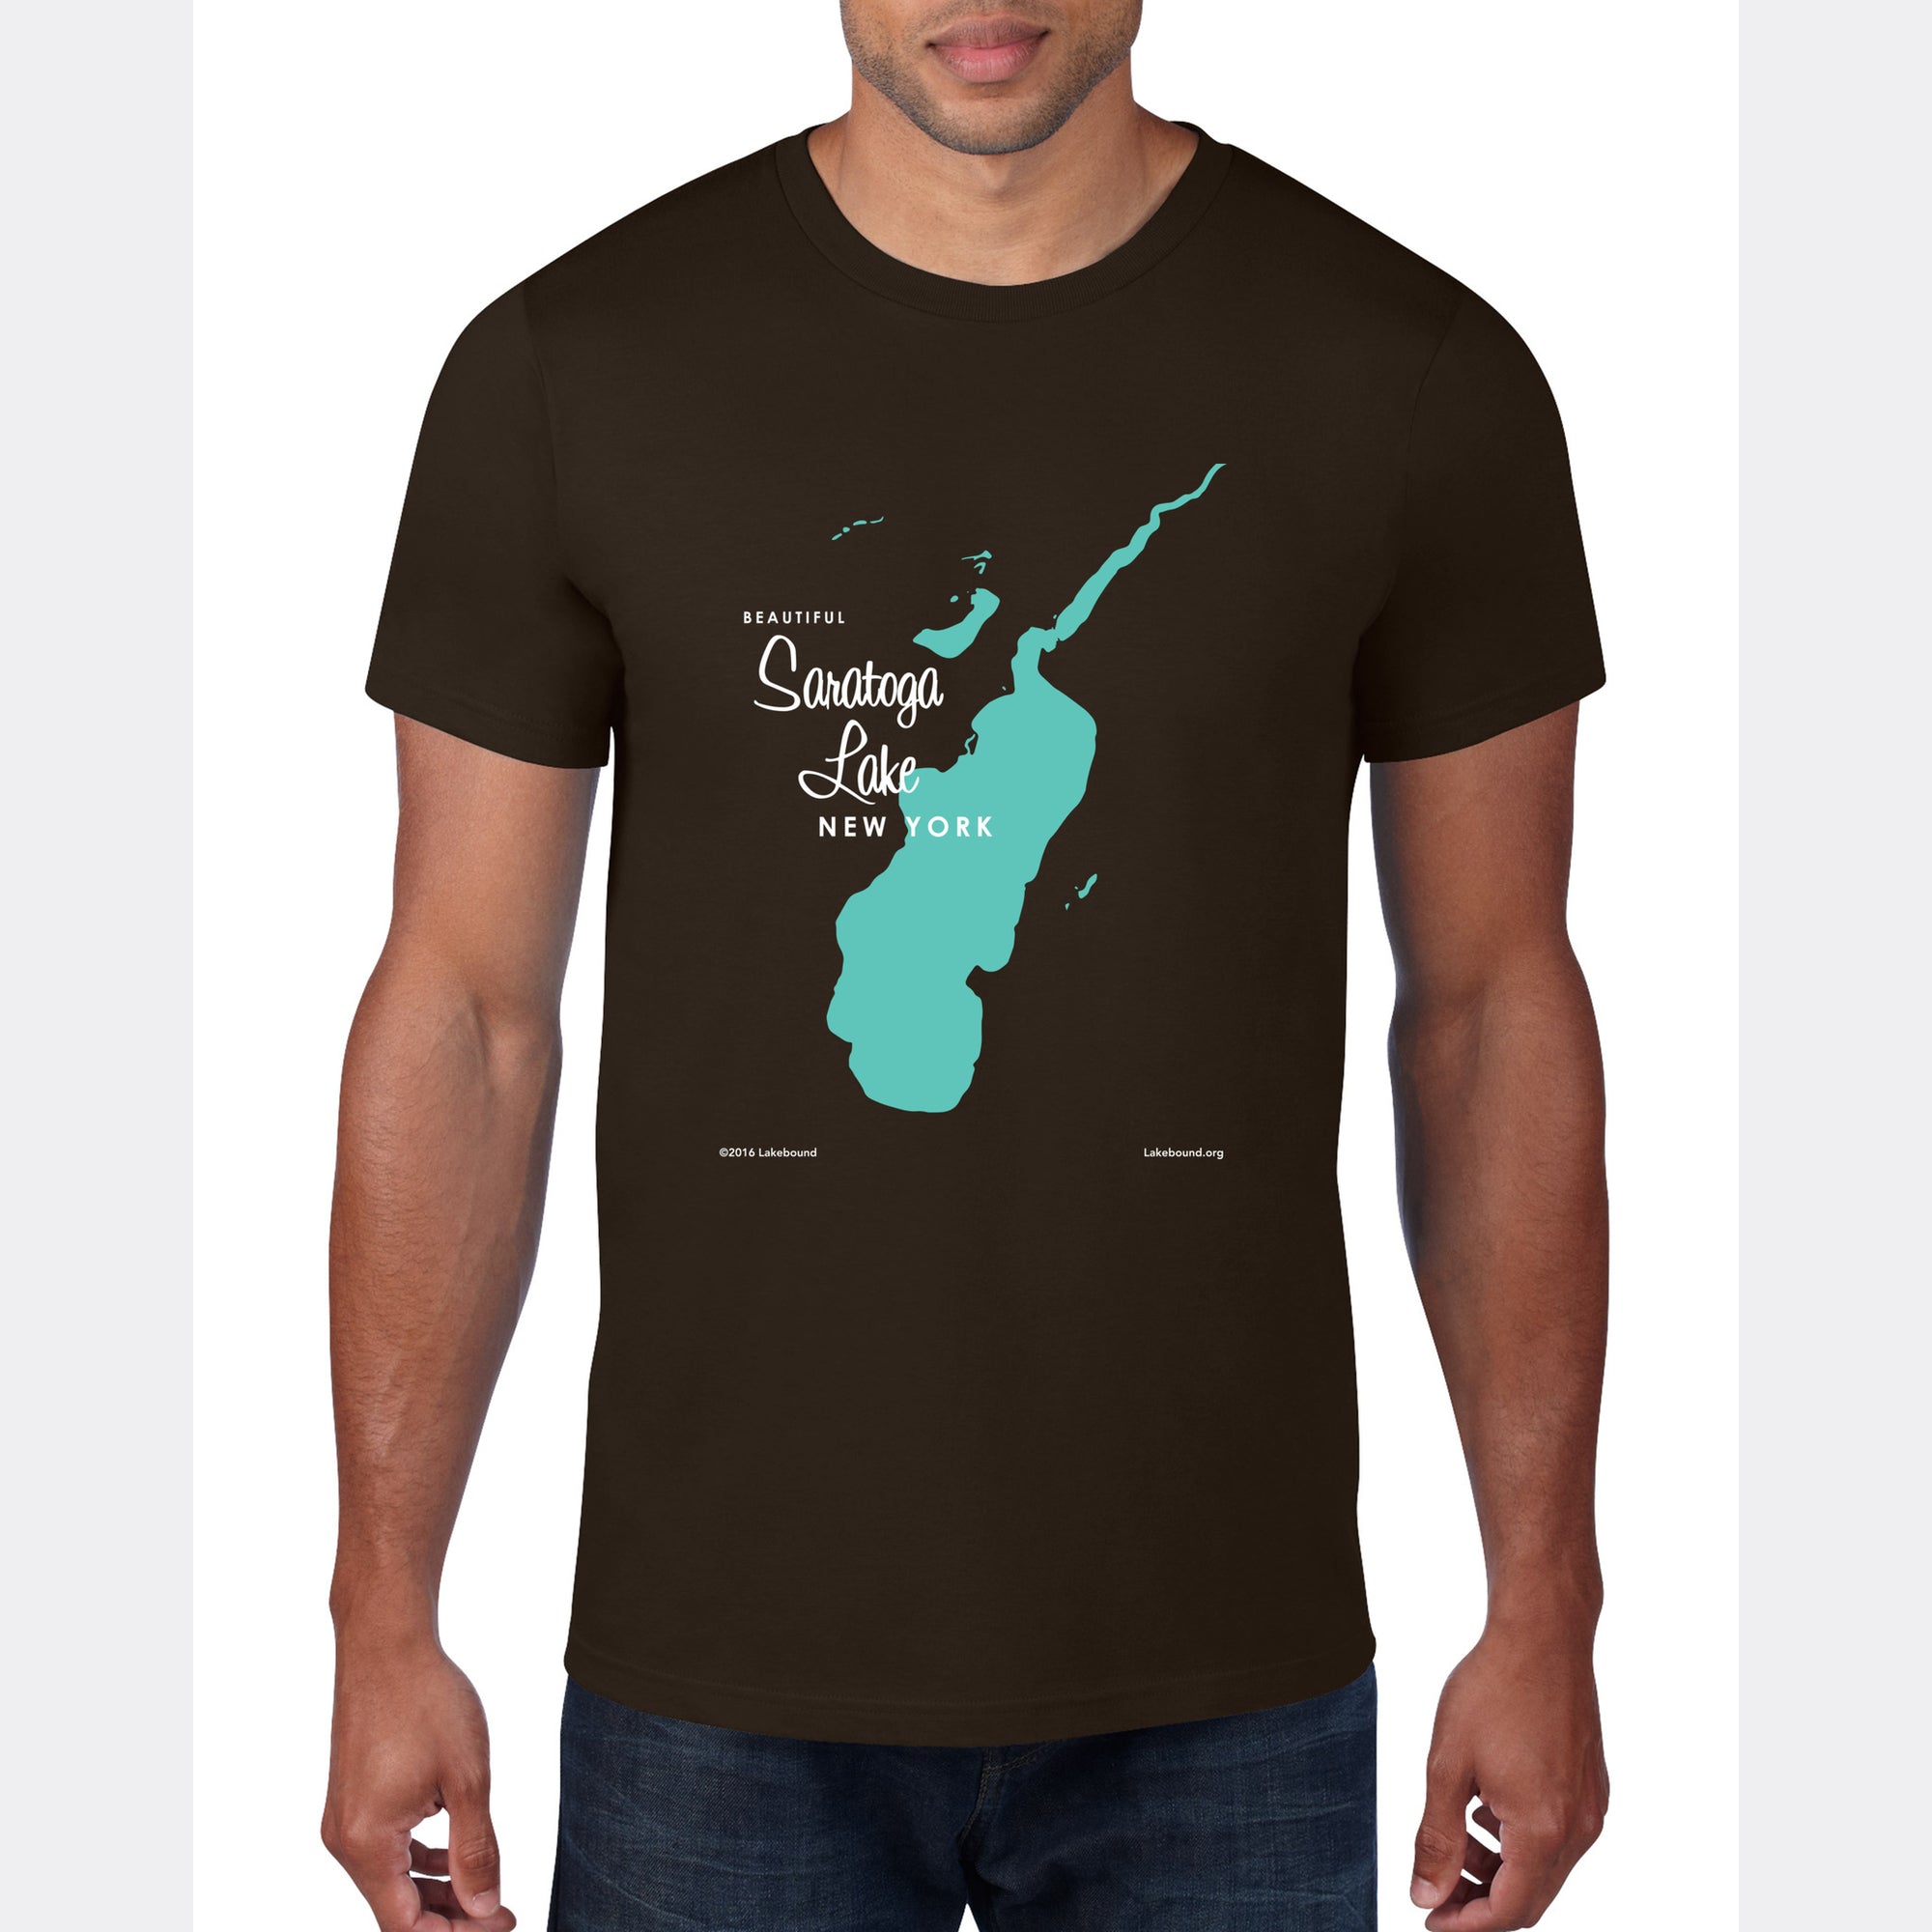 Saratoga Lake New York, T-Shirt